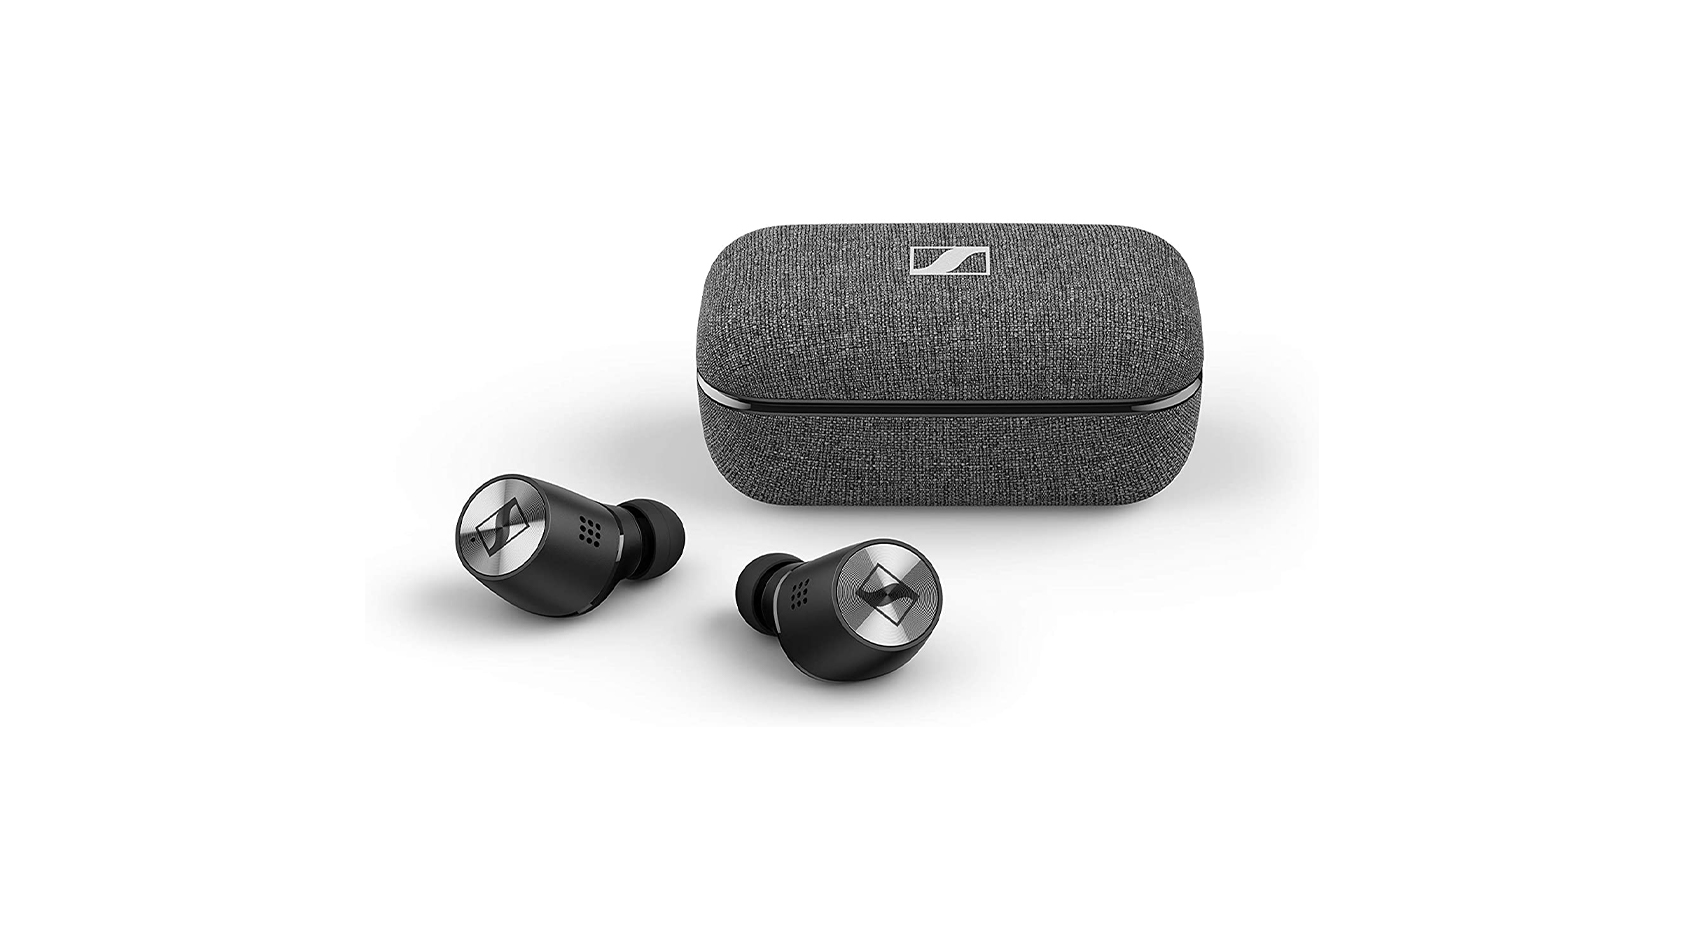 The Sennheiser MOMENTUM True Wireless 2 noise canceling earphones outside of the gray charging case, against a white background.